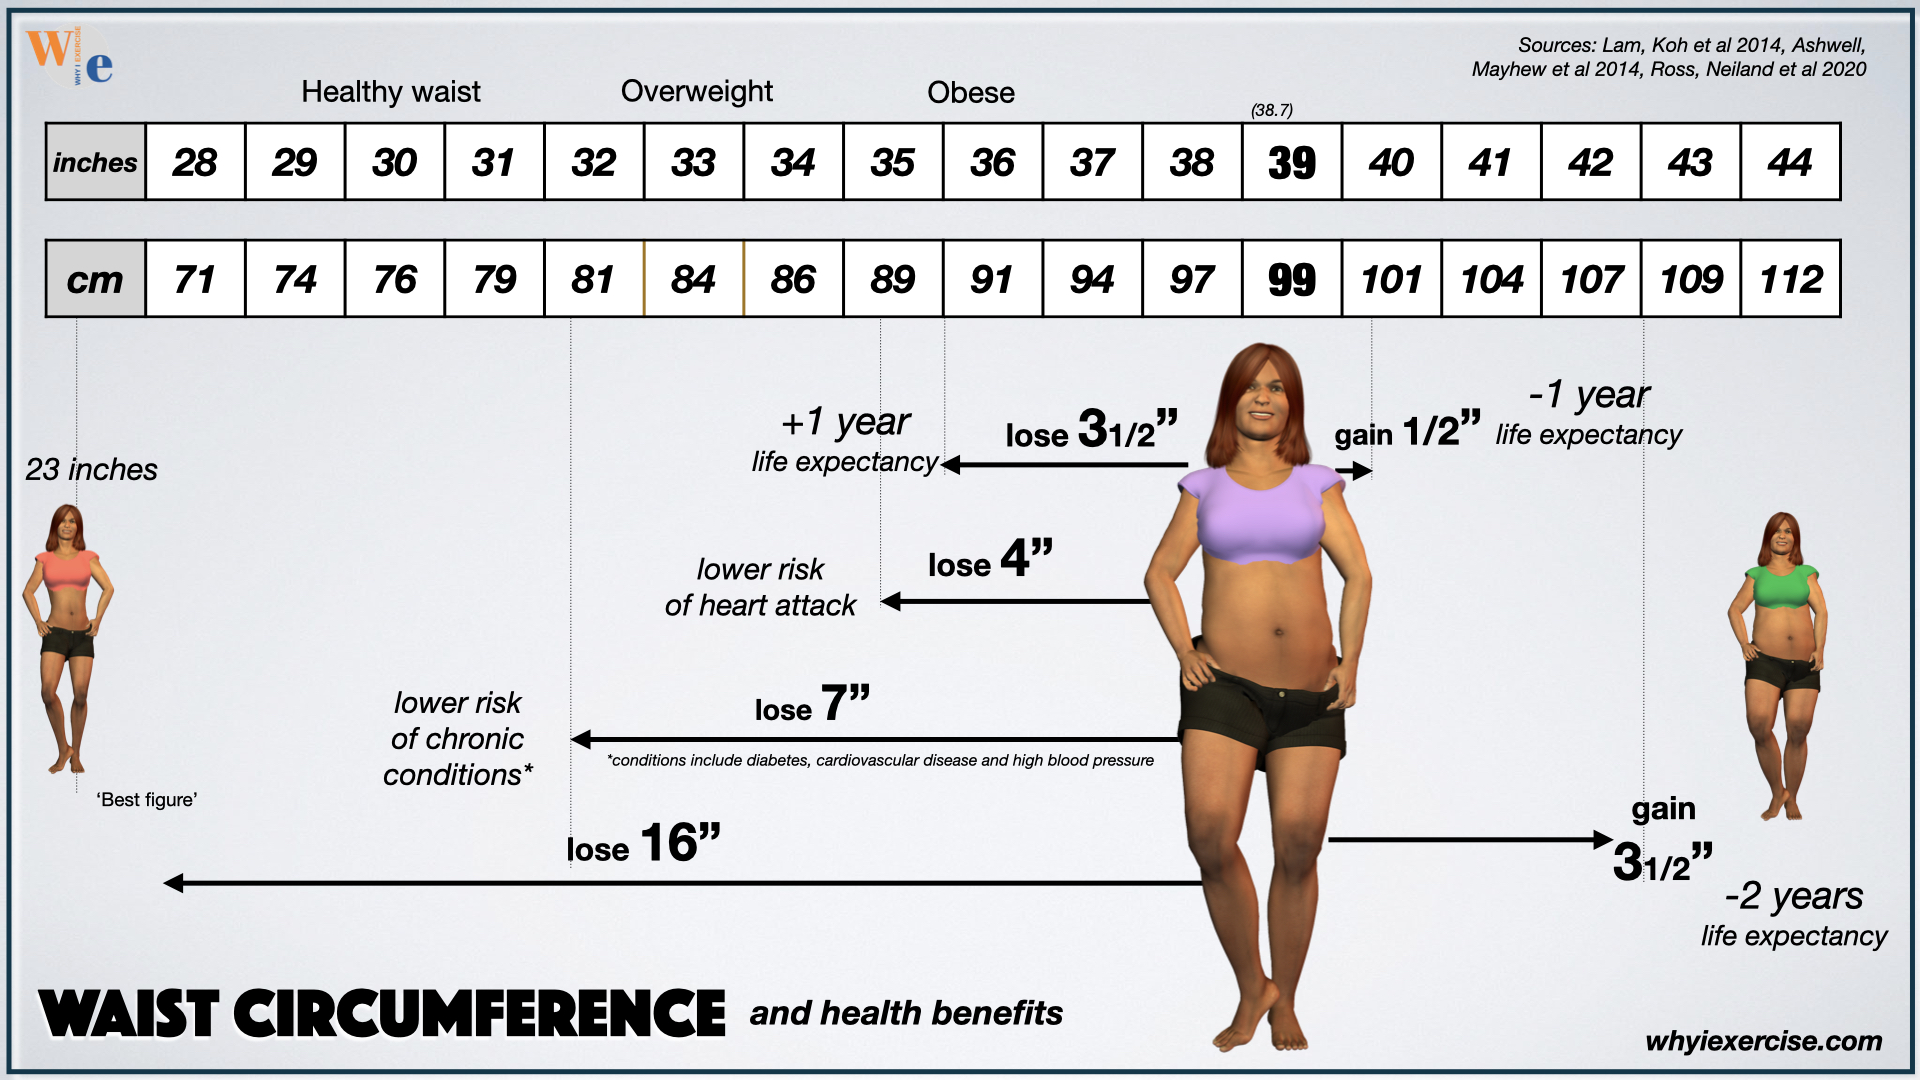 Waist circumference measurements and health indicators